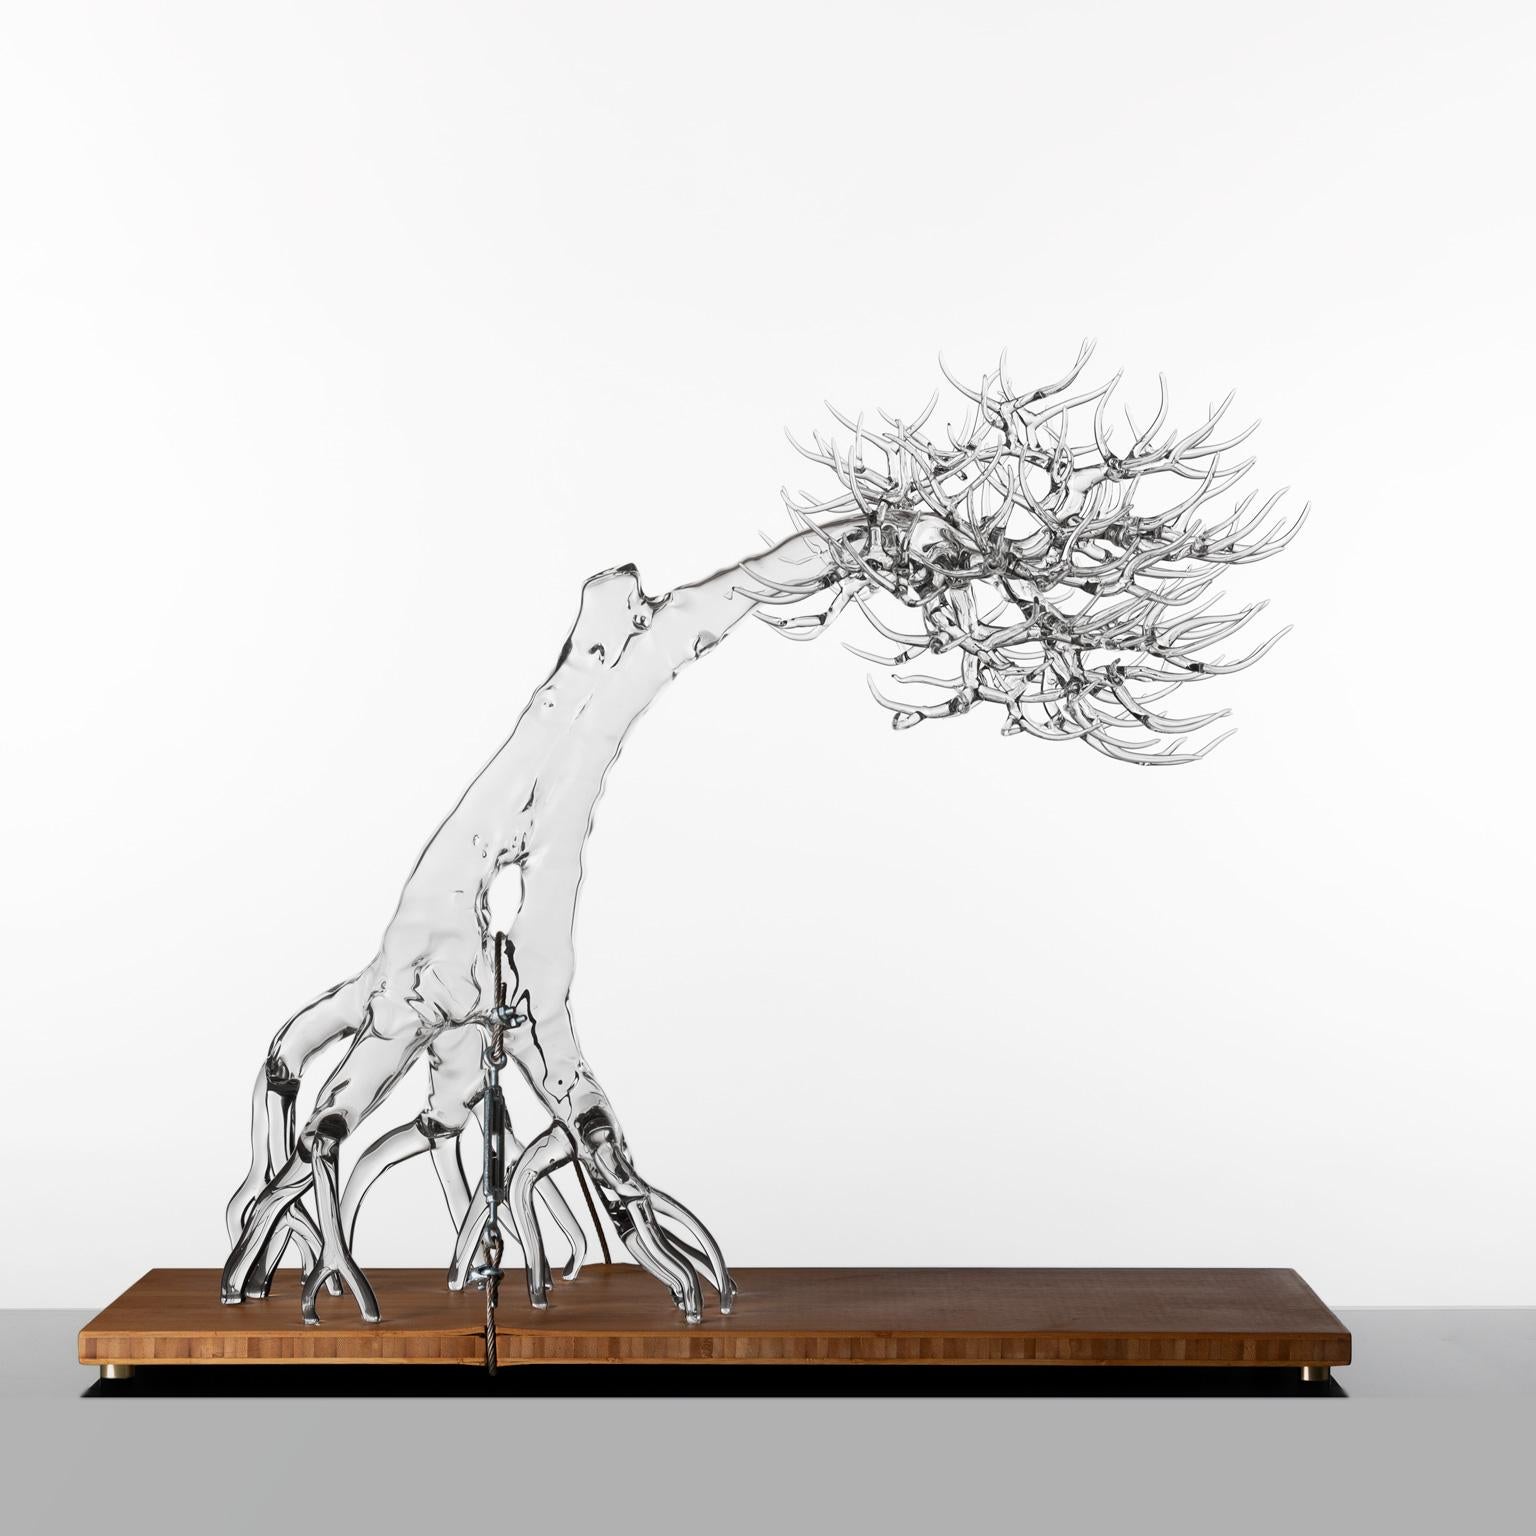 Hand-blown glass sculpture by Simone Crestani.

